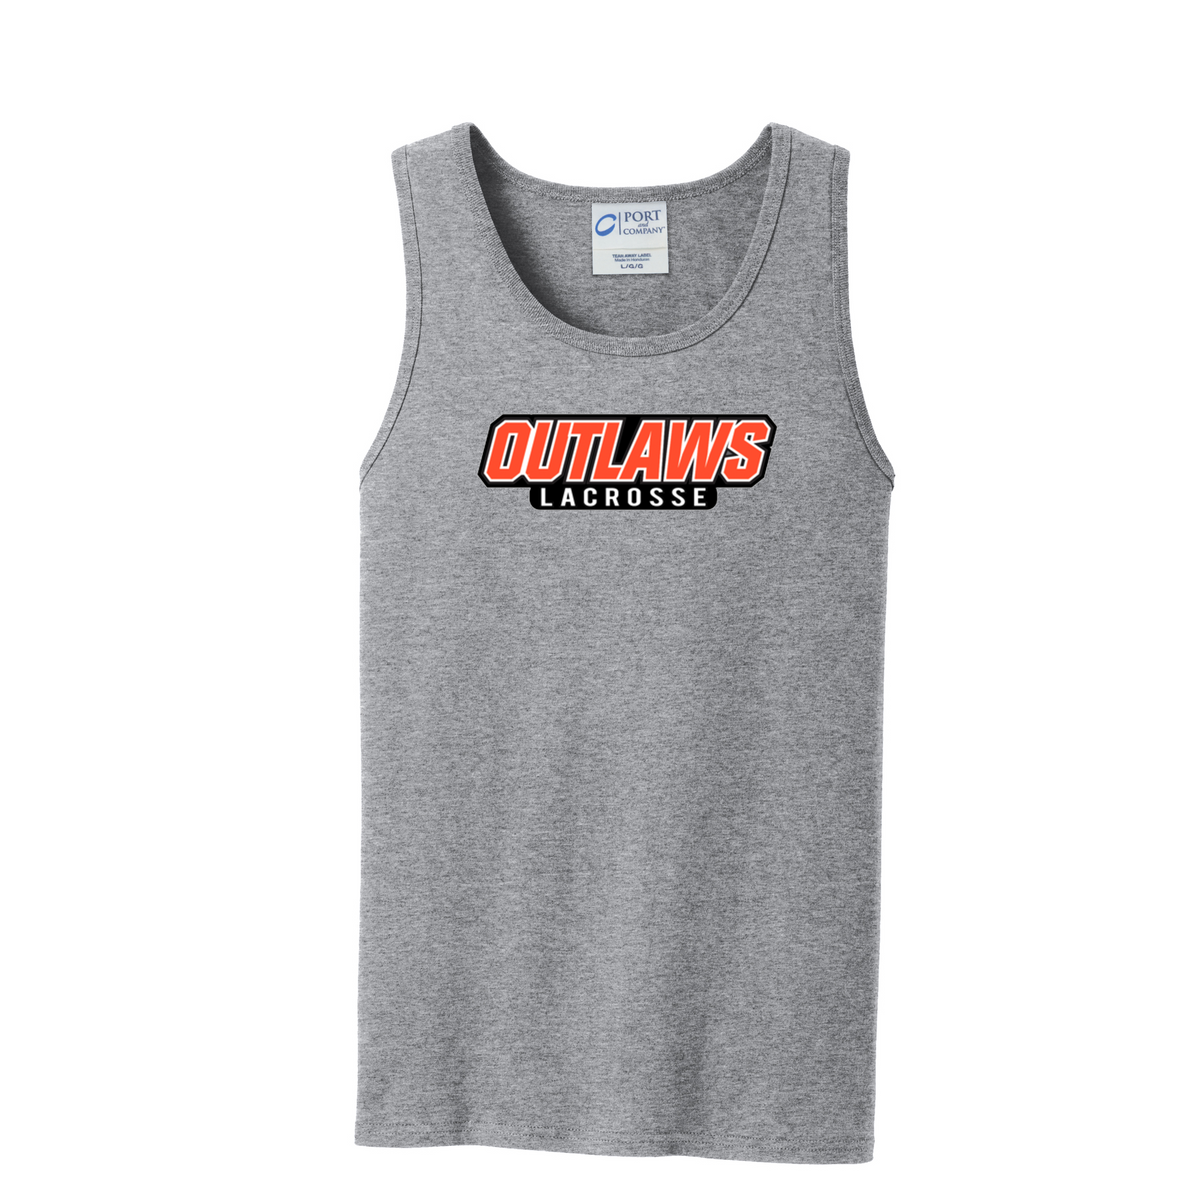 Outlaws Lacrosse Sleeveless Cotton Tank Top